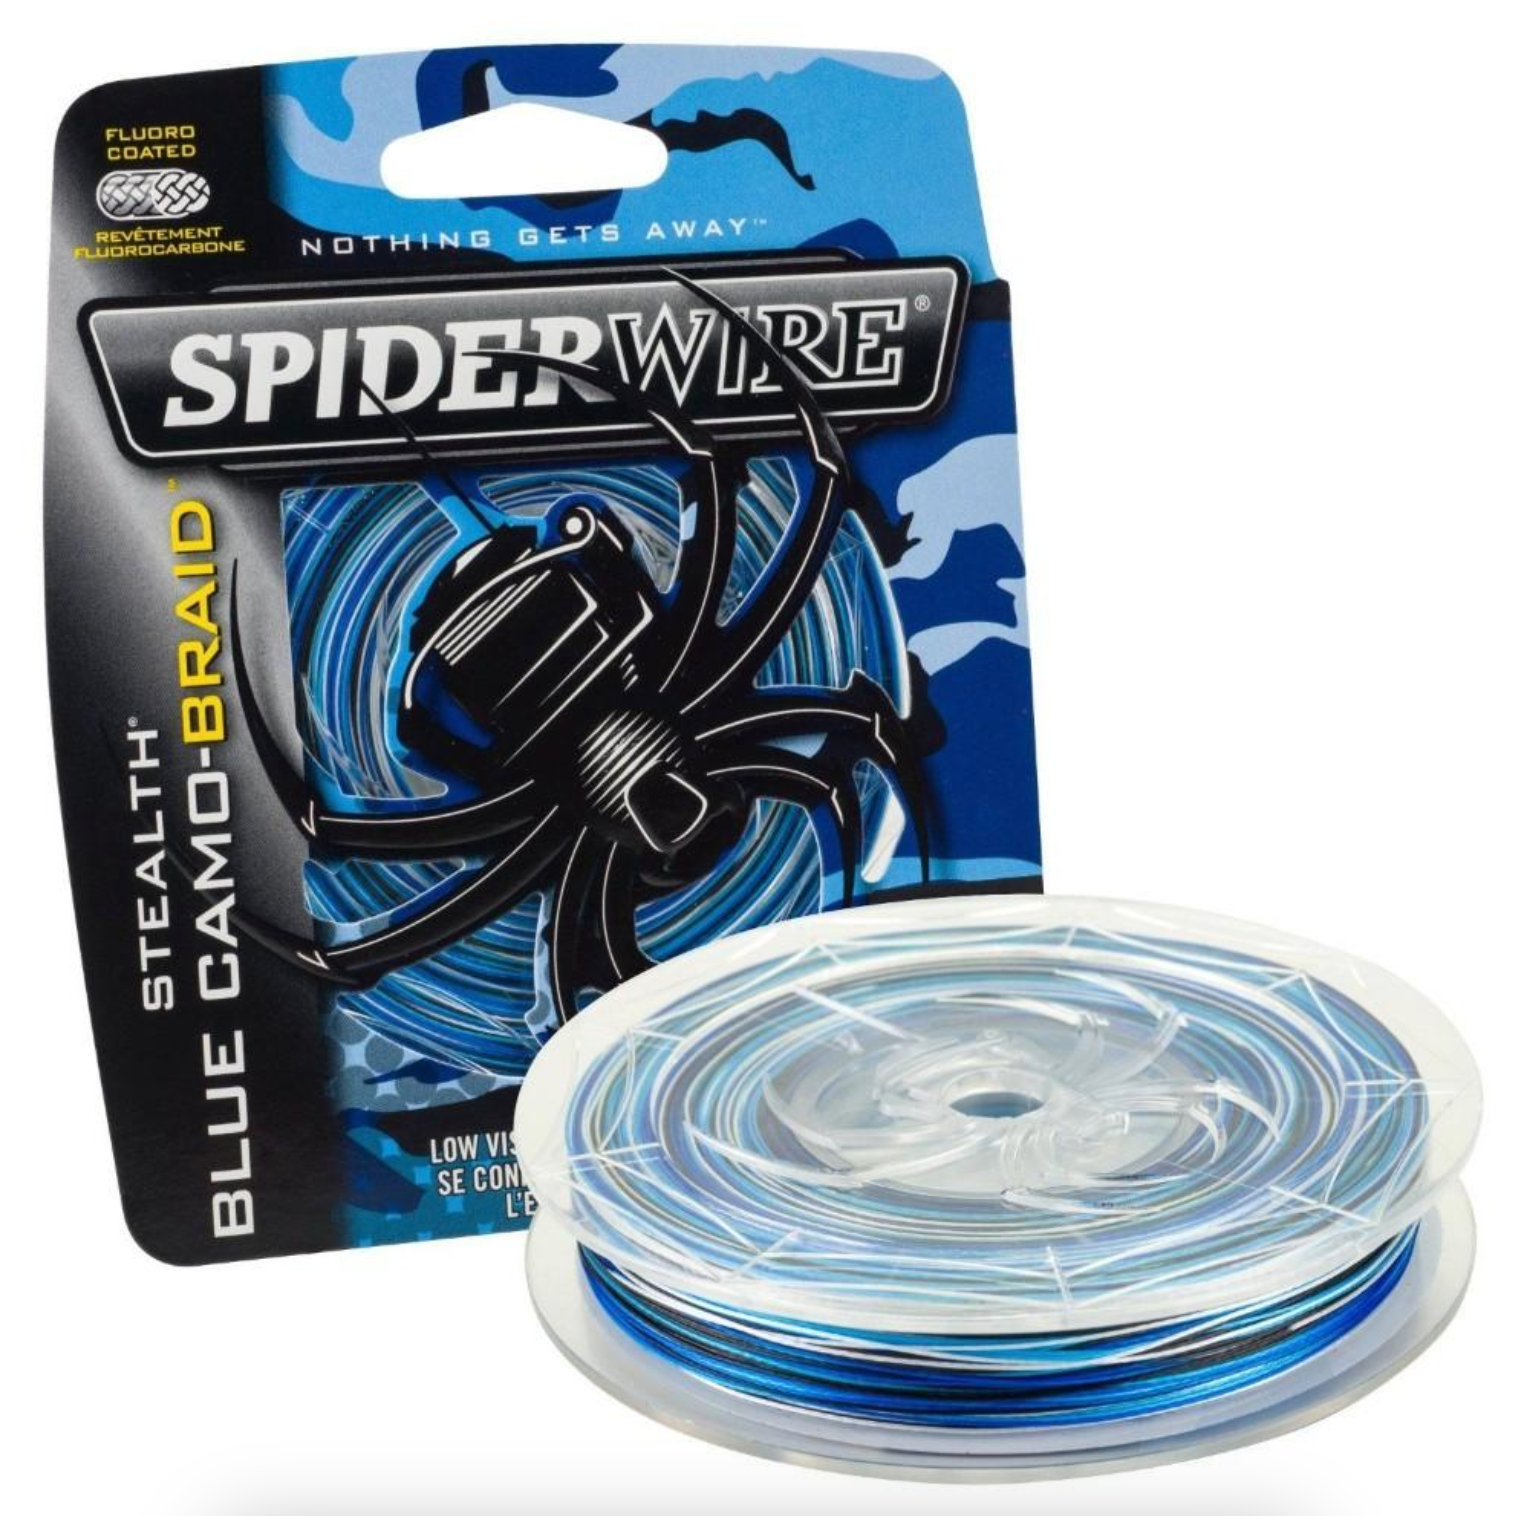 Spiderwire Stealth Blue Camo Braided Line 1500/3000 Yards